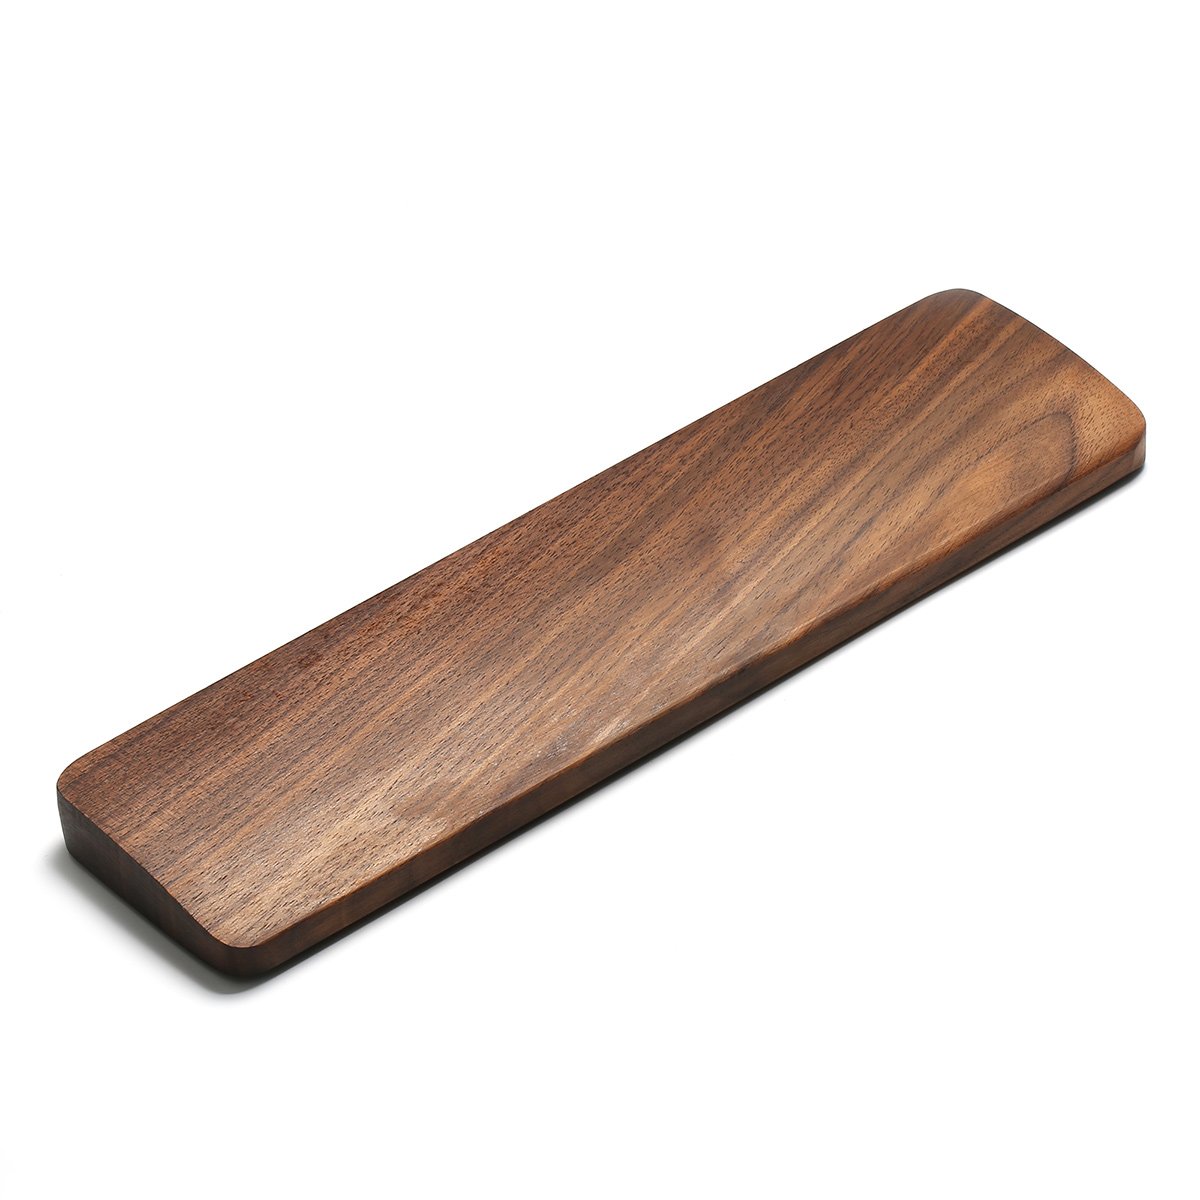 Black Walnutwood Wrist Rest Pad Keyboard Wood Wrist Protection Anti-skid Pad for 60-Key 60% Keyboard 2